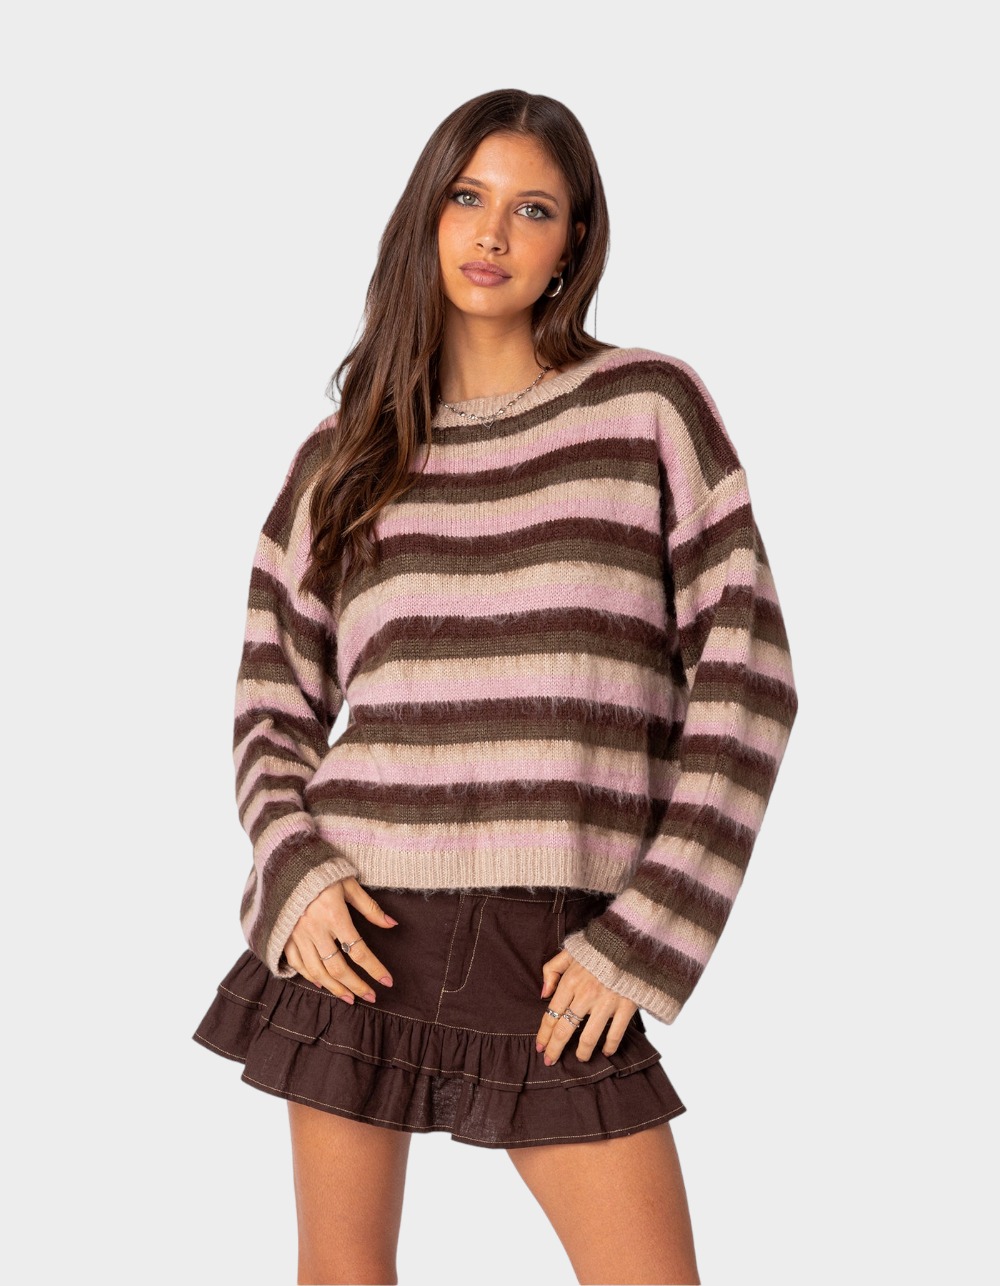 EDIKTED Oversized Fuzzy Striped Sweater